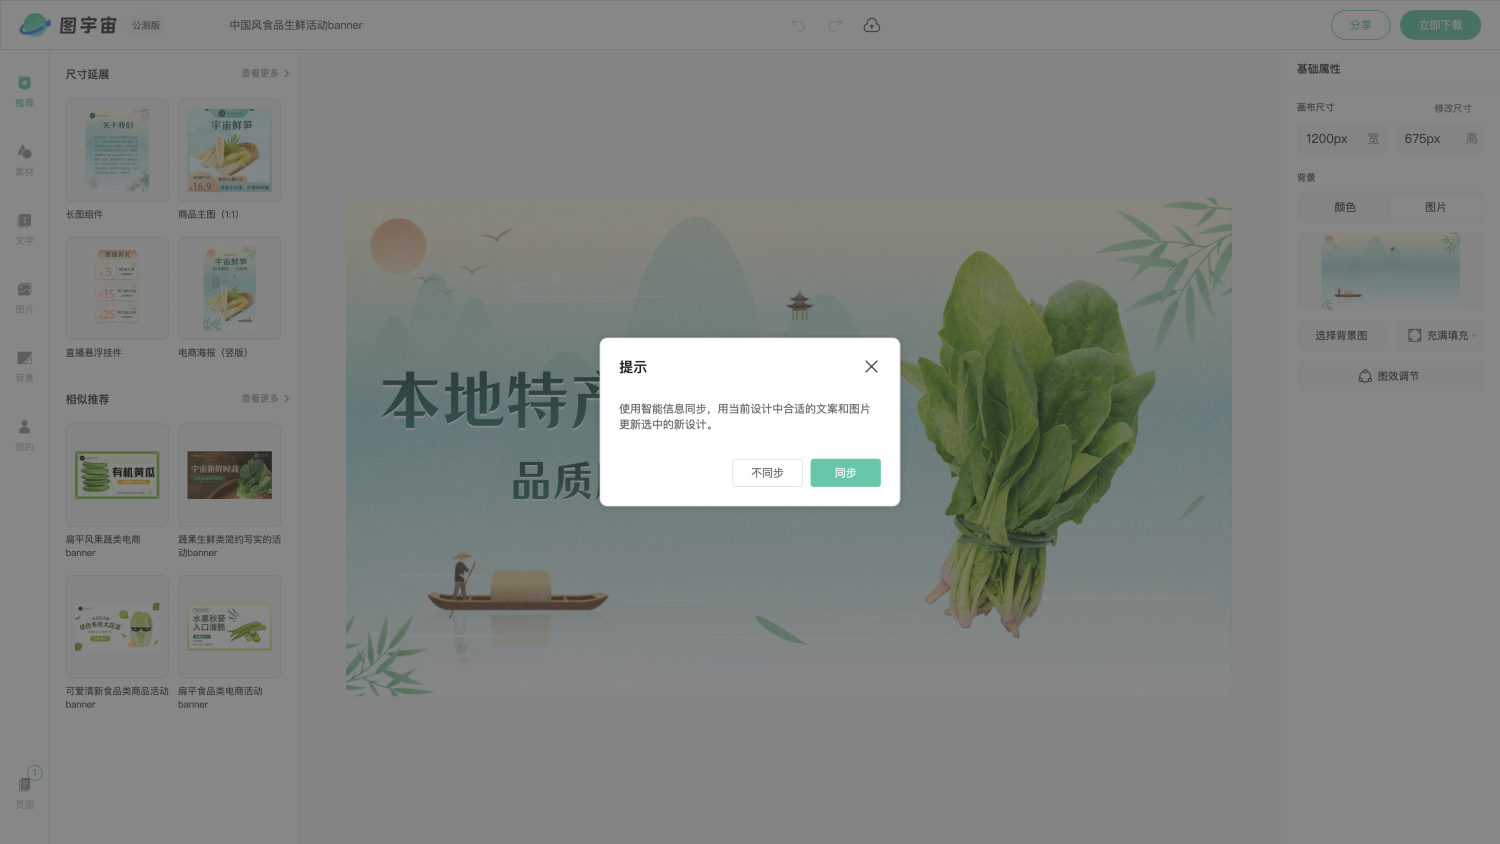 图宇宙-编辑器-中国风食品生鲜活动banner